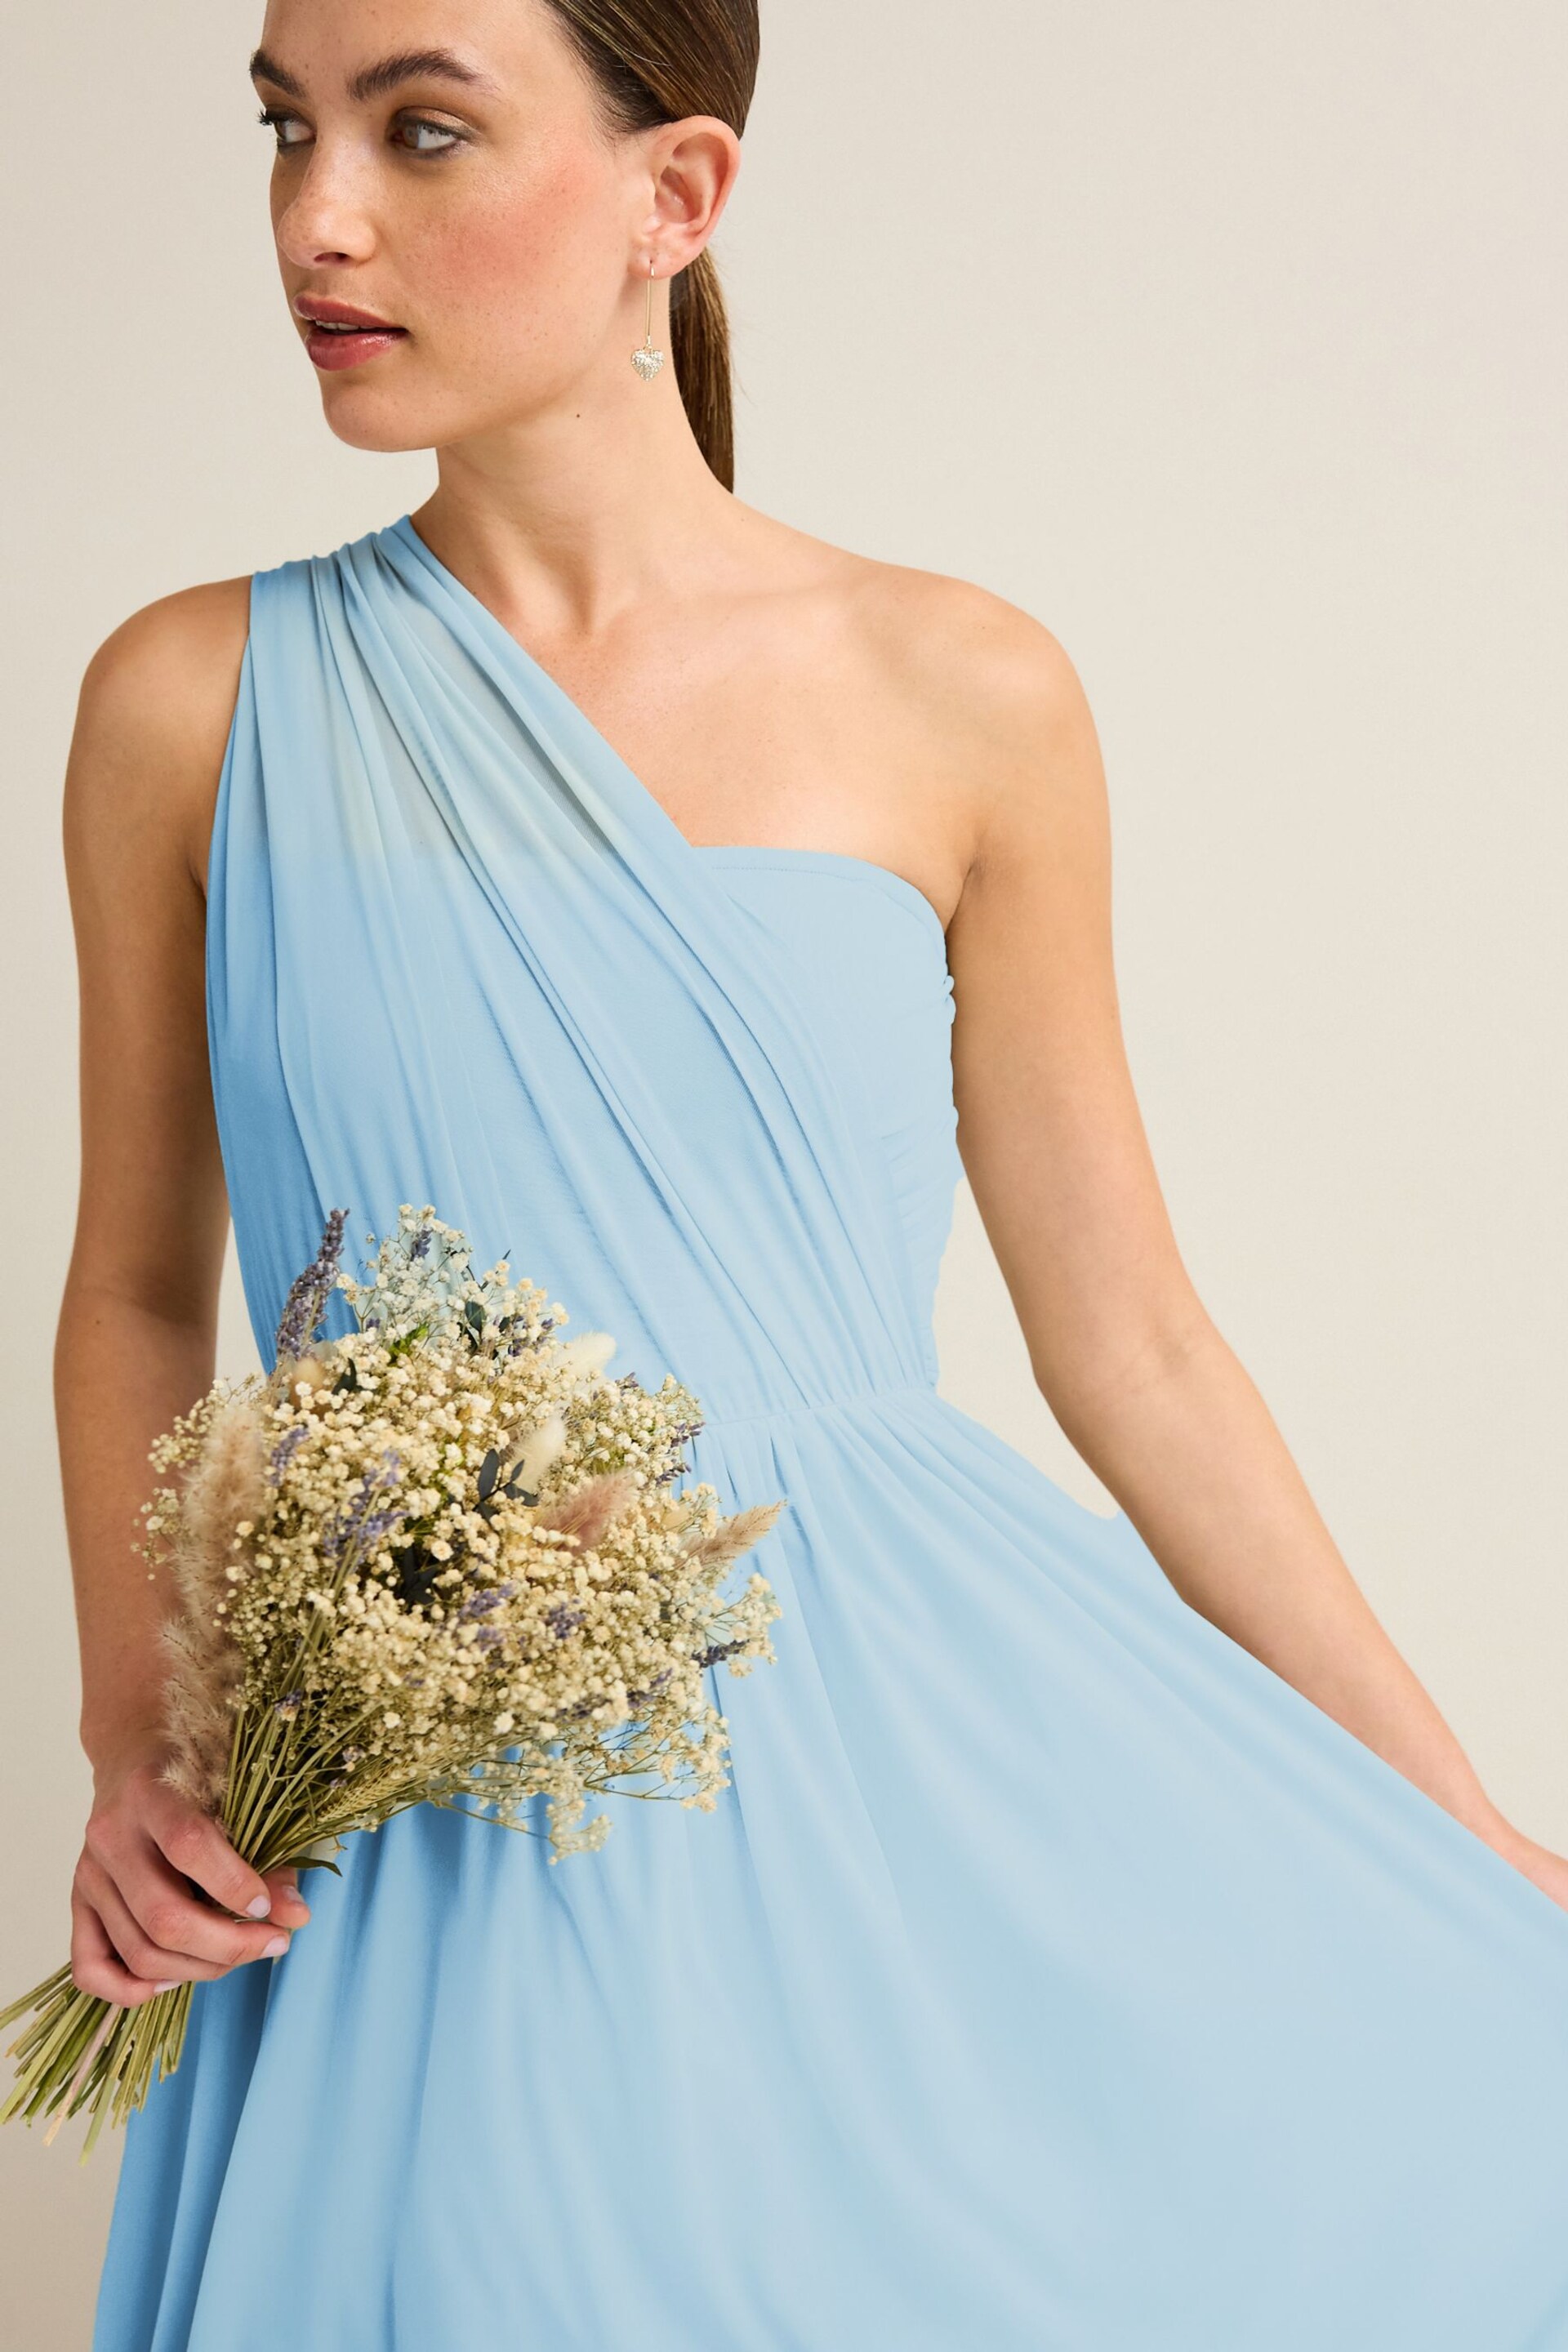 Light Blue Mesh Multiway Bridesmaid Wedding Maxi Dress - Image 6 of 8